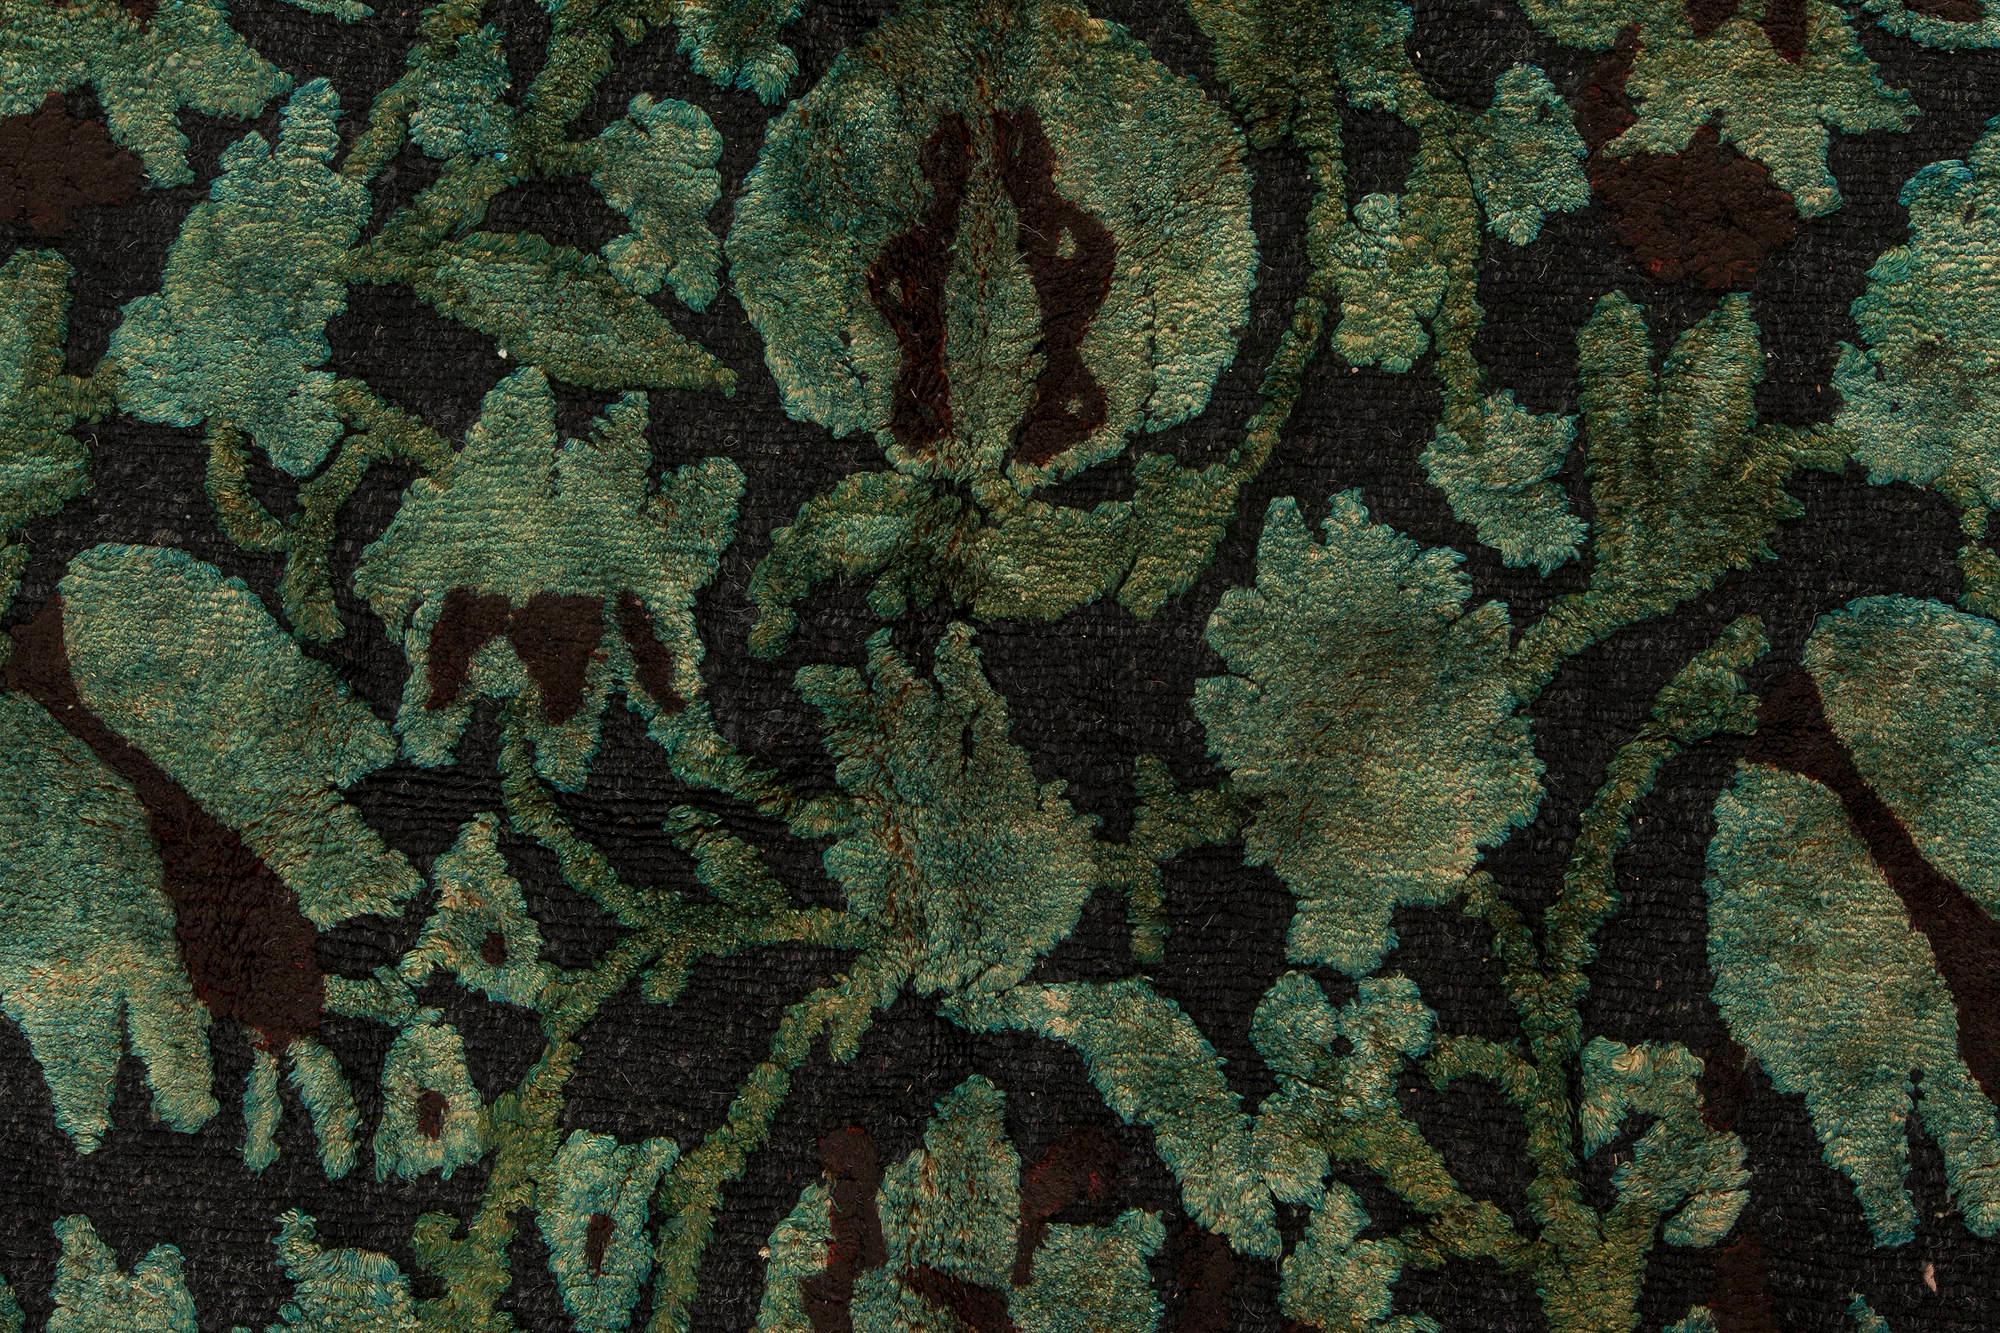 Contemporary floral green and black European inspired Tibetan rug by Doris Leslie Blau.
Size: 7'10